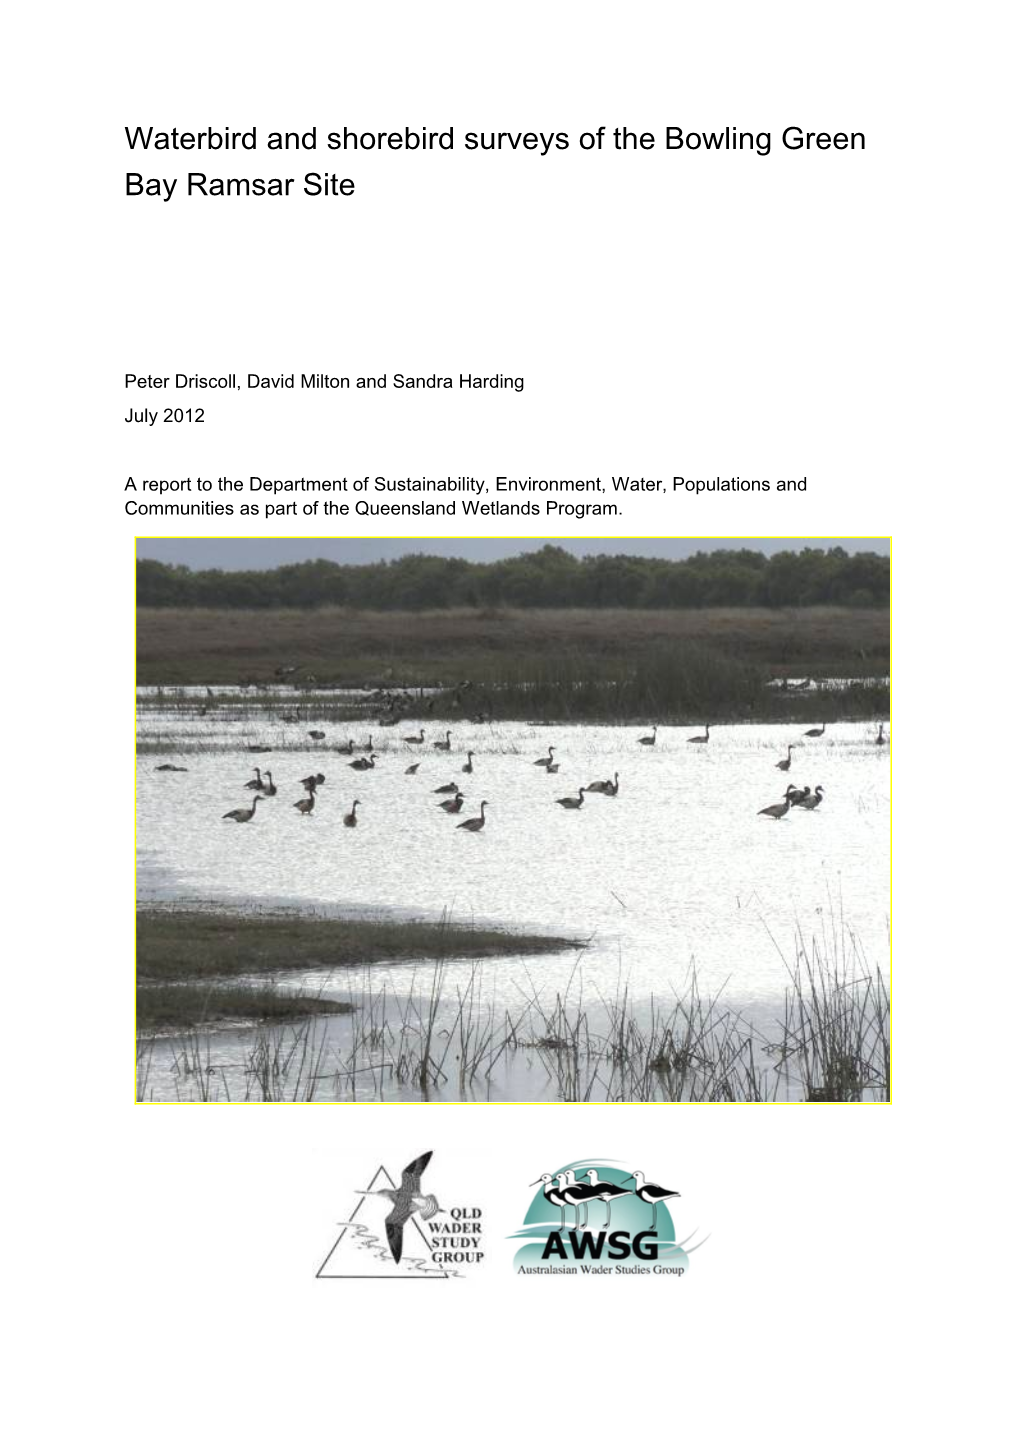 Waterbird and Shorebird Surveys of the Bowling Green Bay Ramsar Site